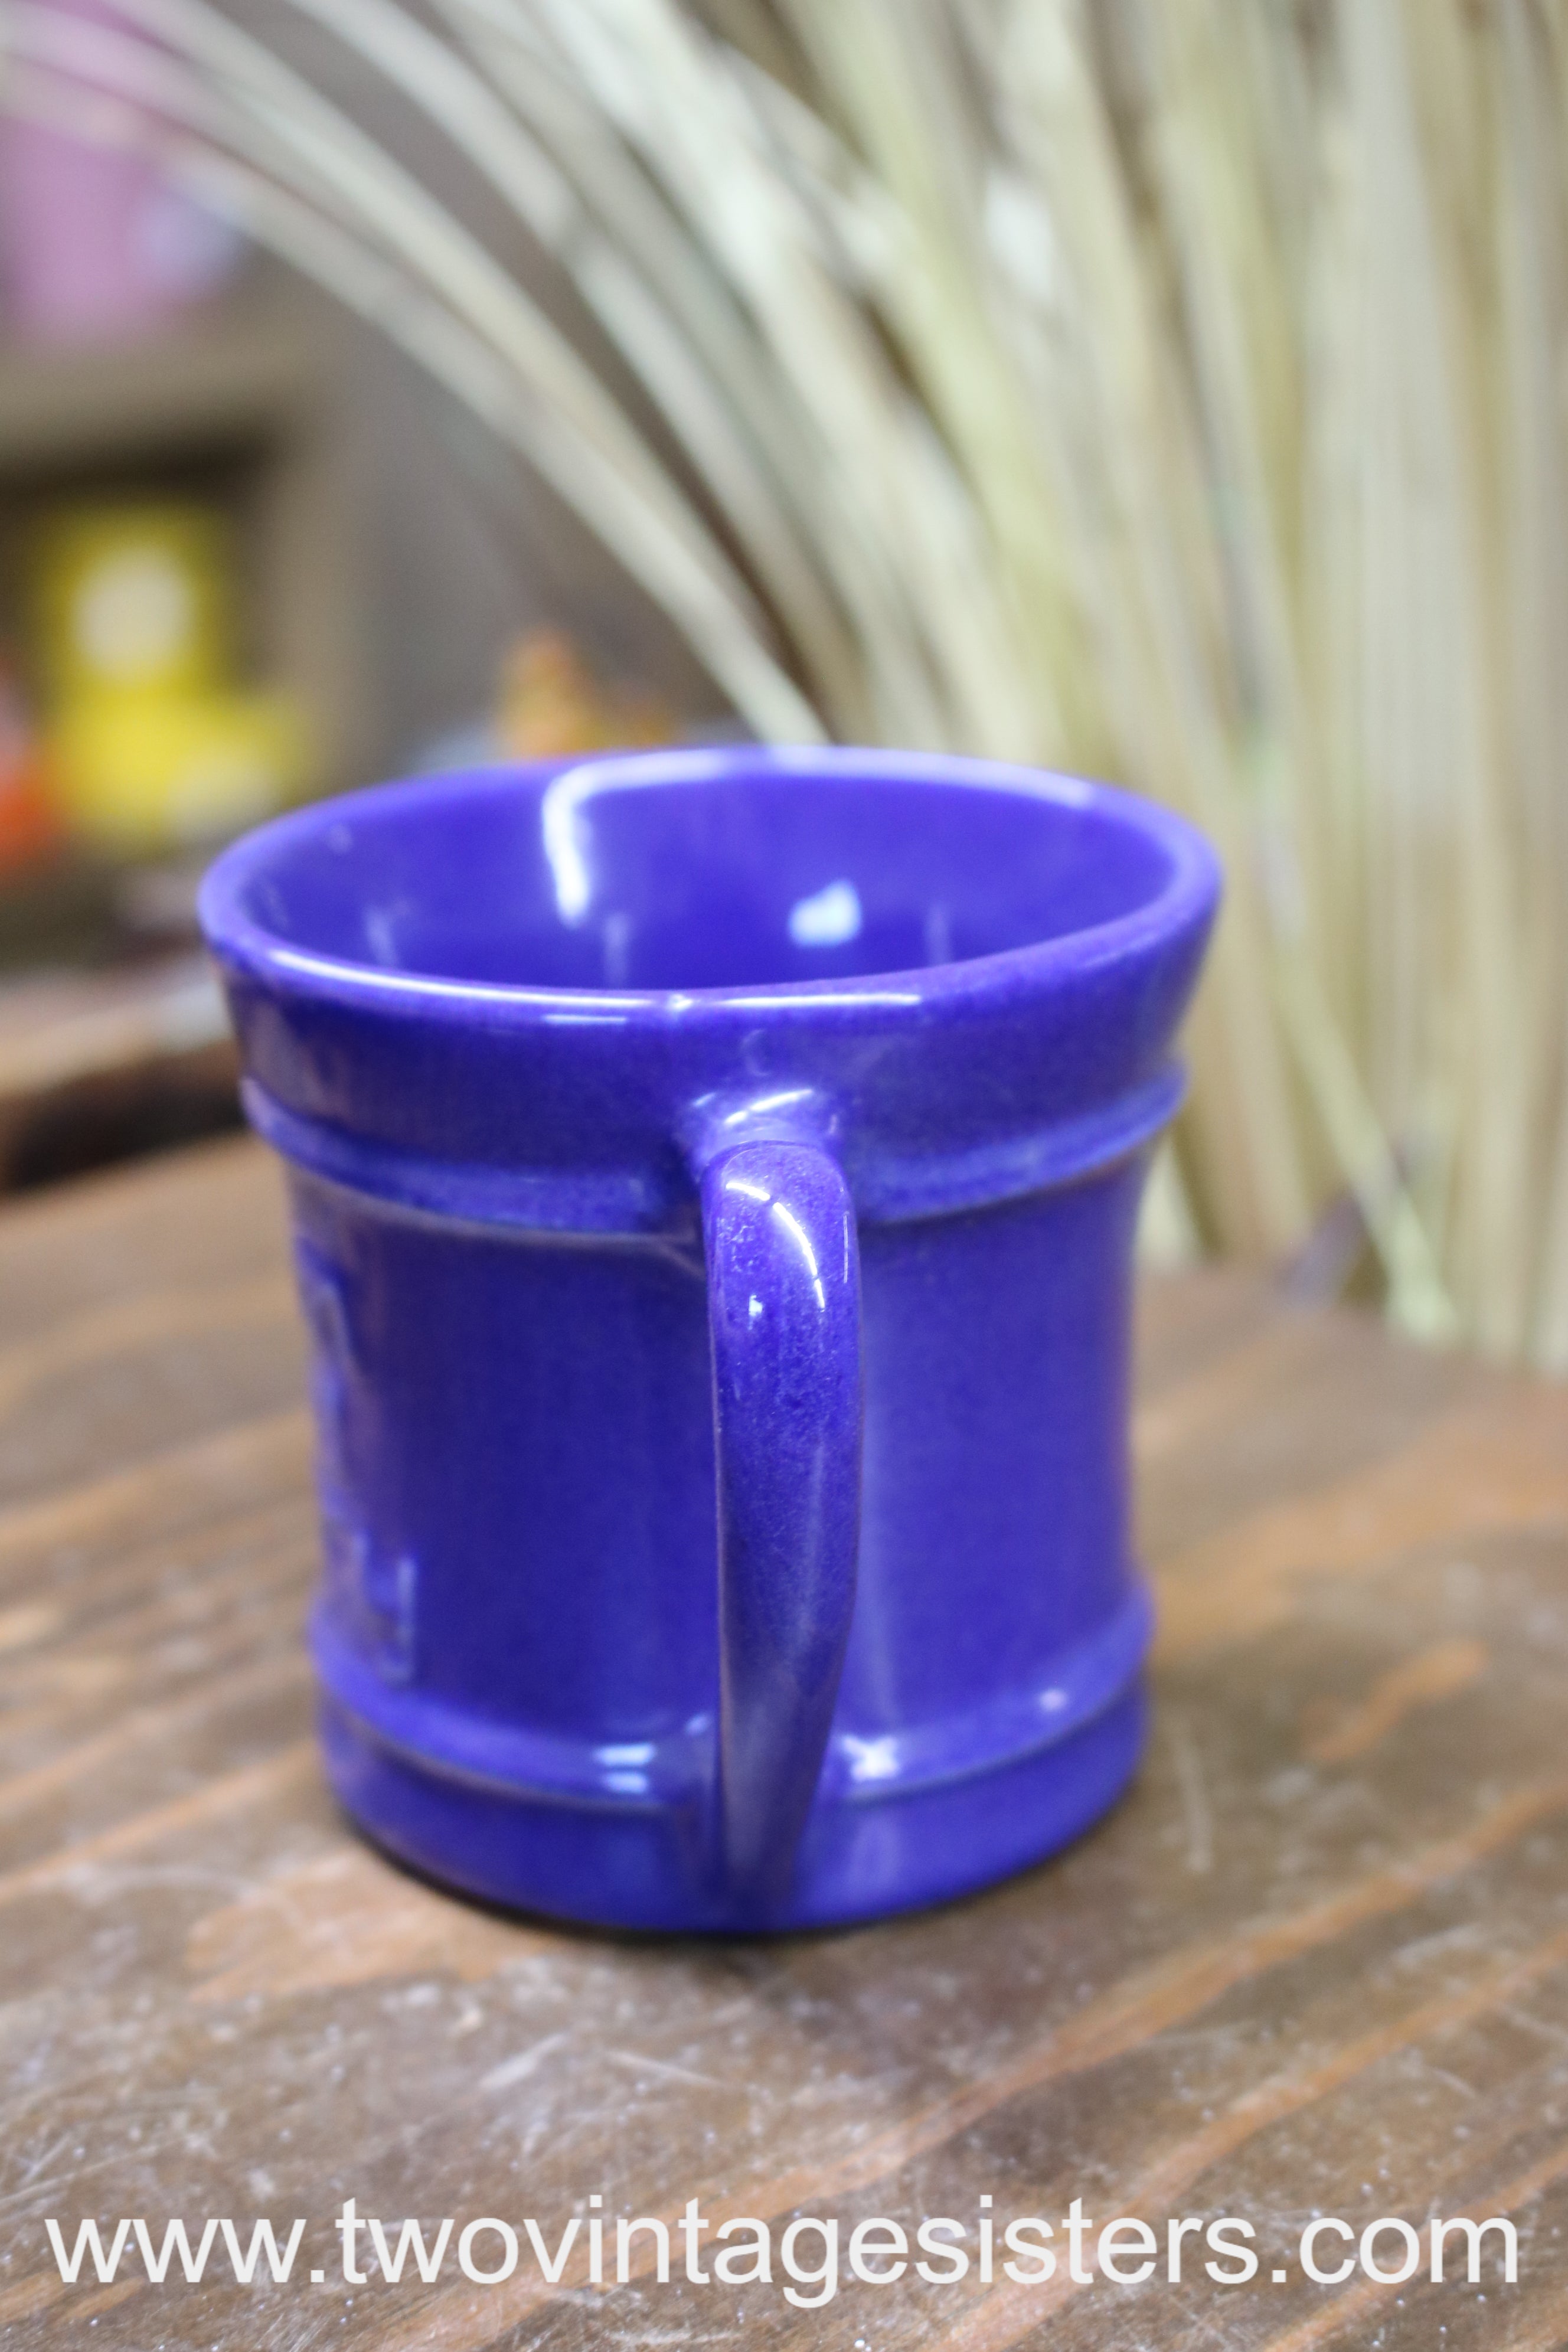 BLUE CRYSTAL RESIN Coffee Mug by LALUVARTByLorrie